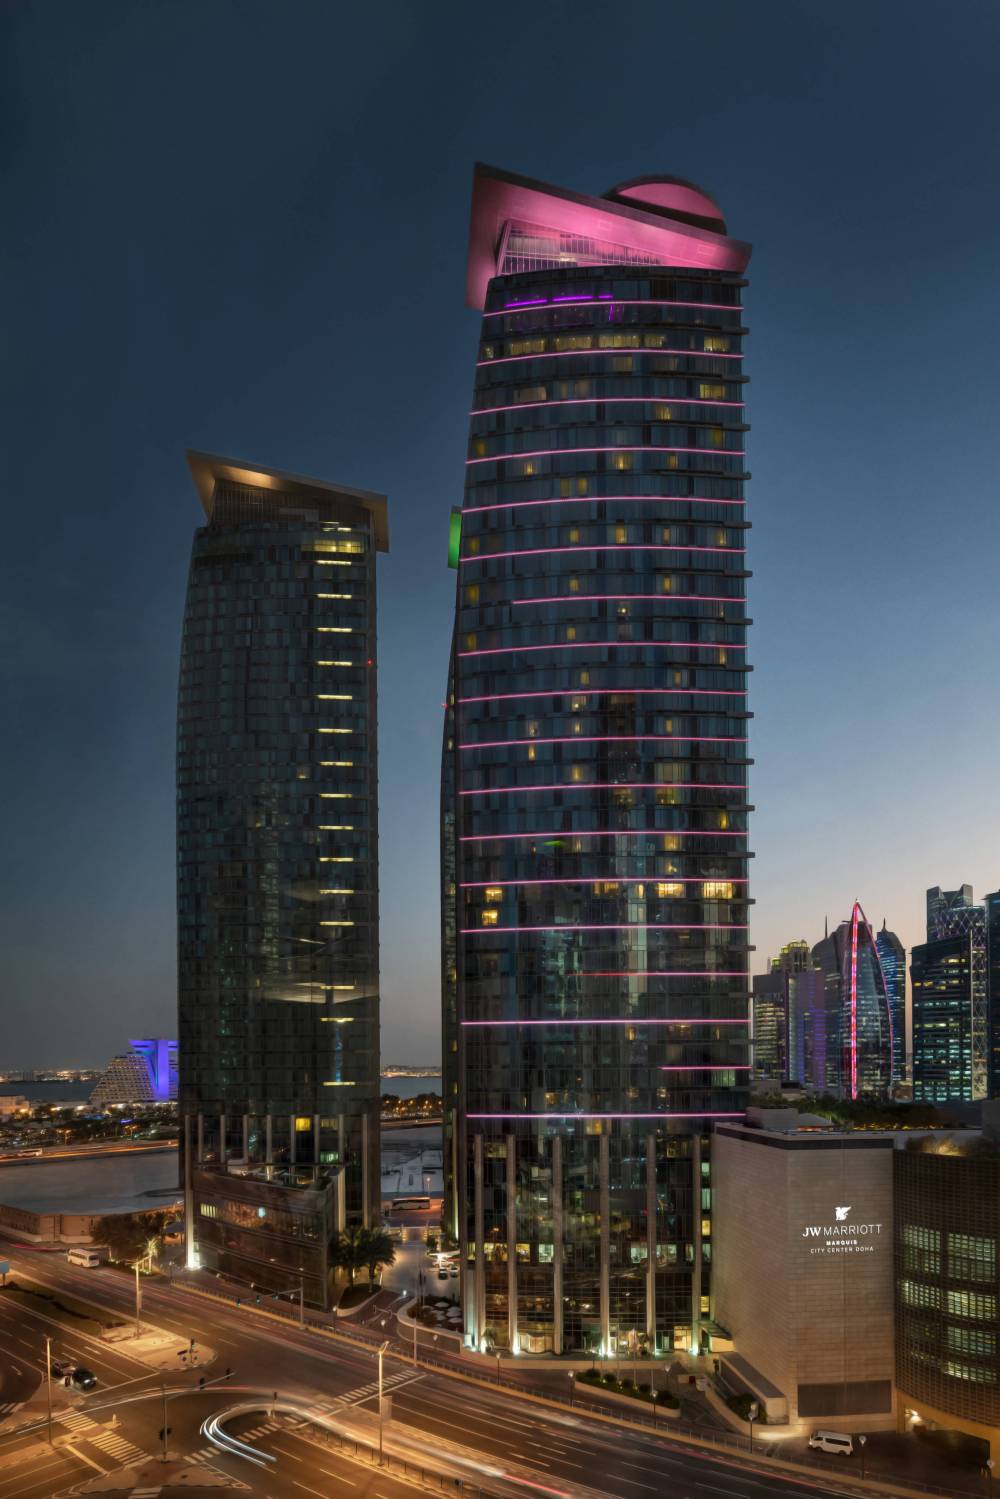 Marriott Jw Marquis City Center Doha